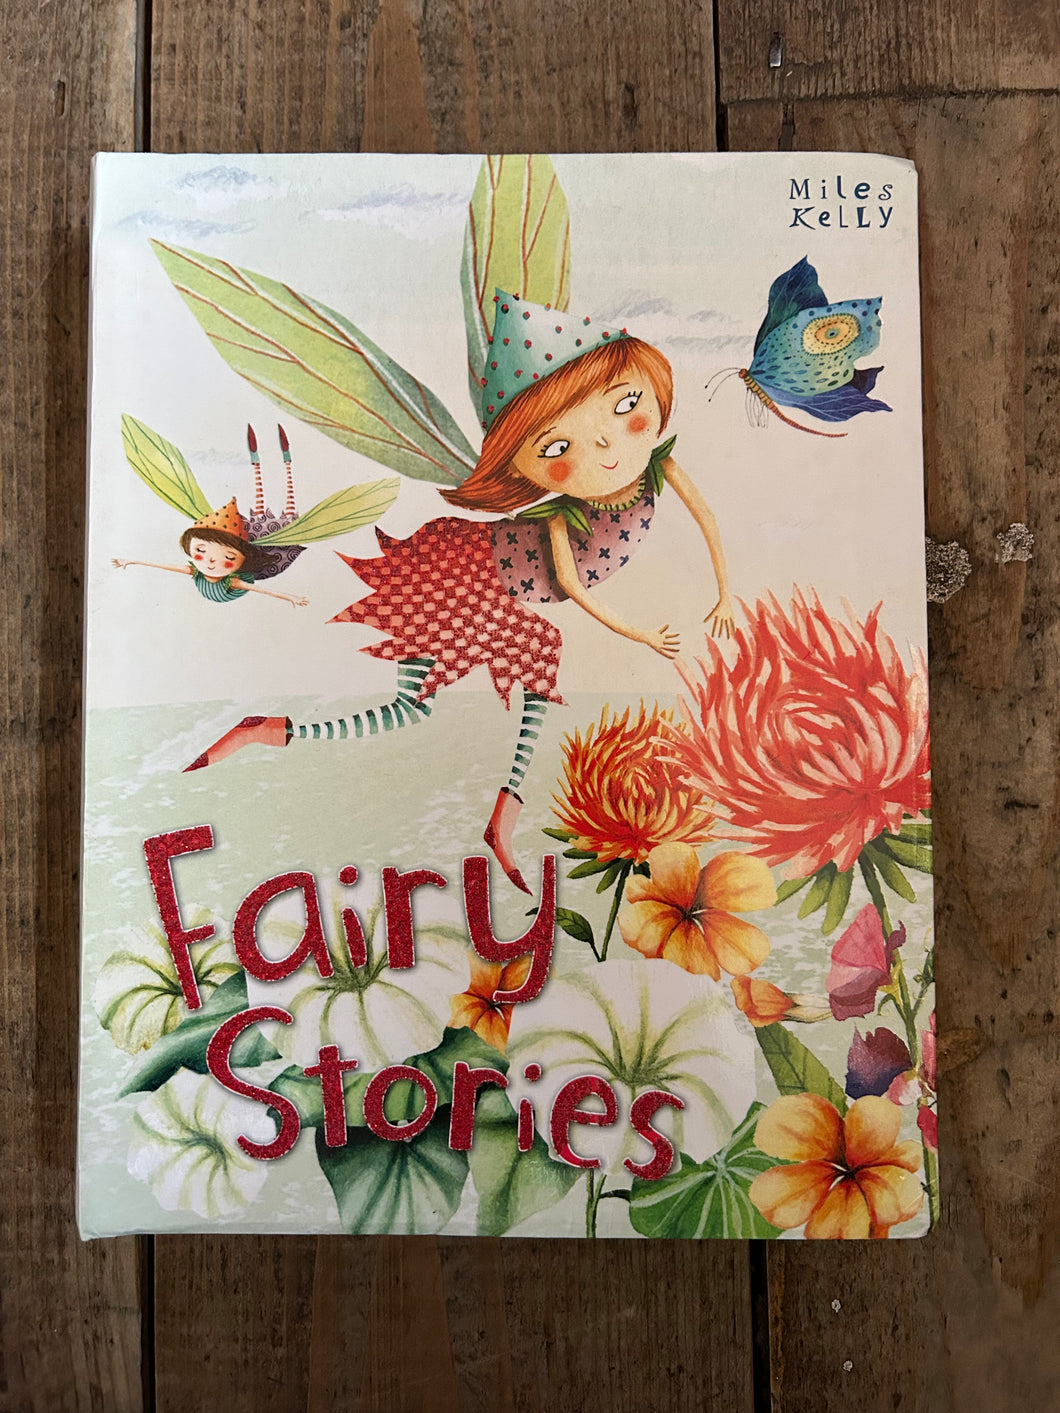 Miles Kelly Fairy stories